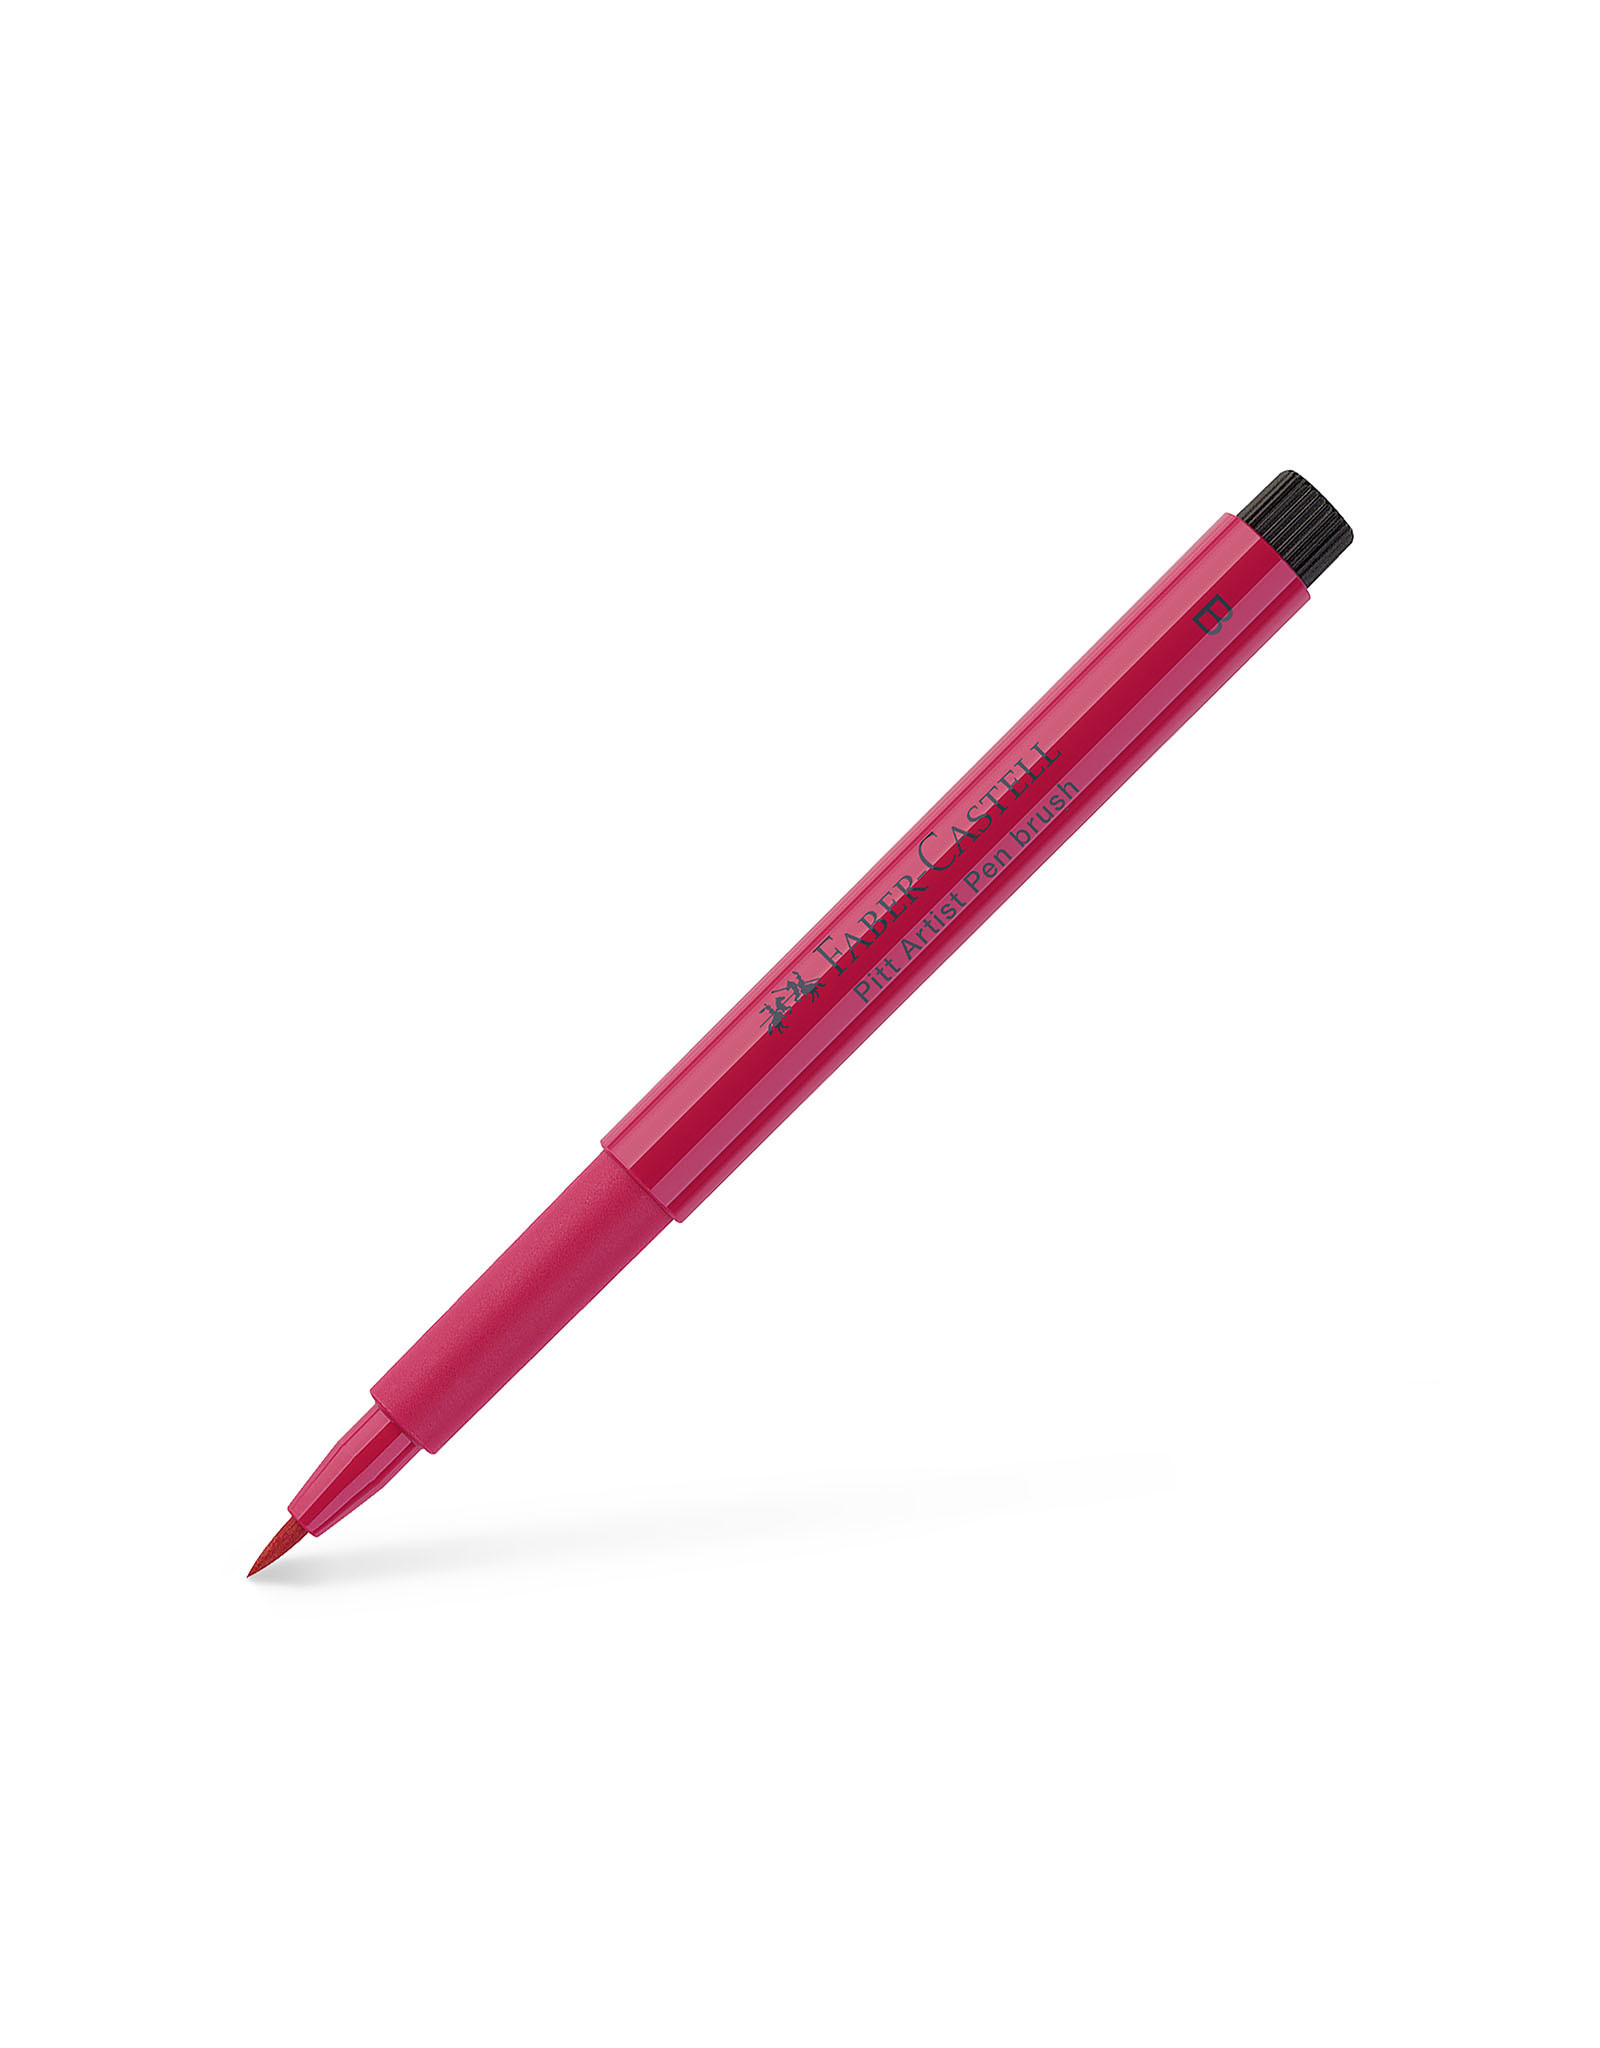 FABER-CASTELL Pitt Artist Pen, Brush, Pink Carmine